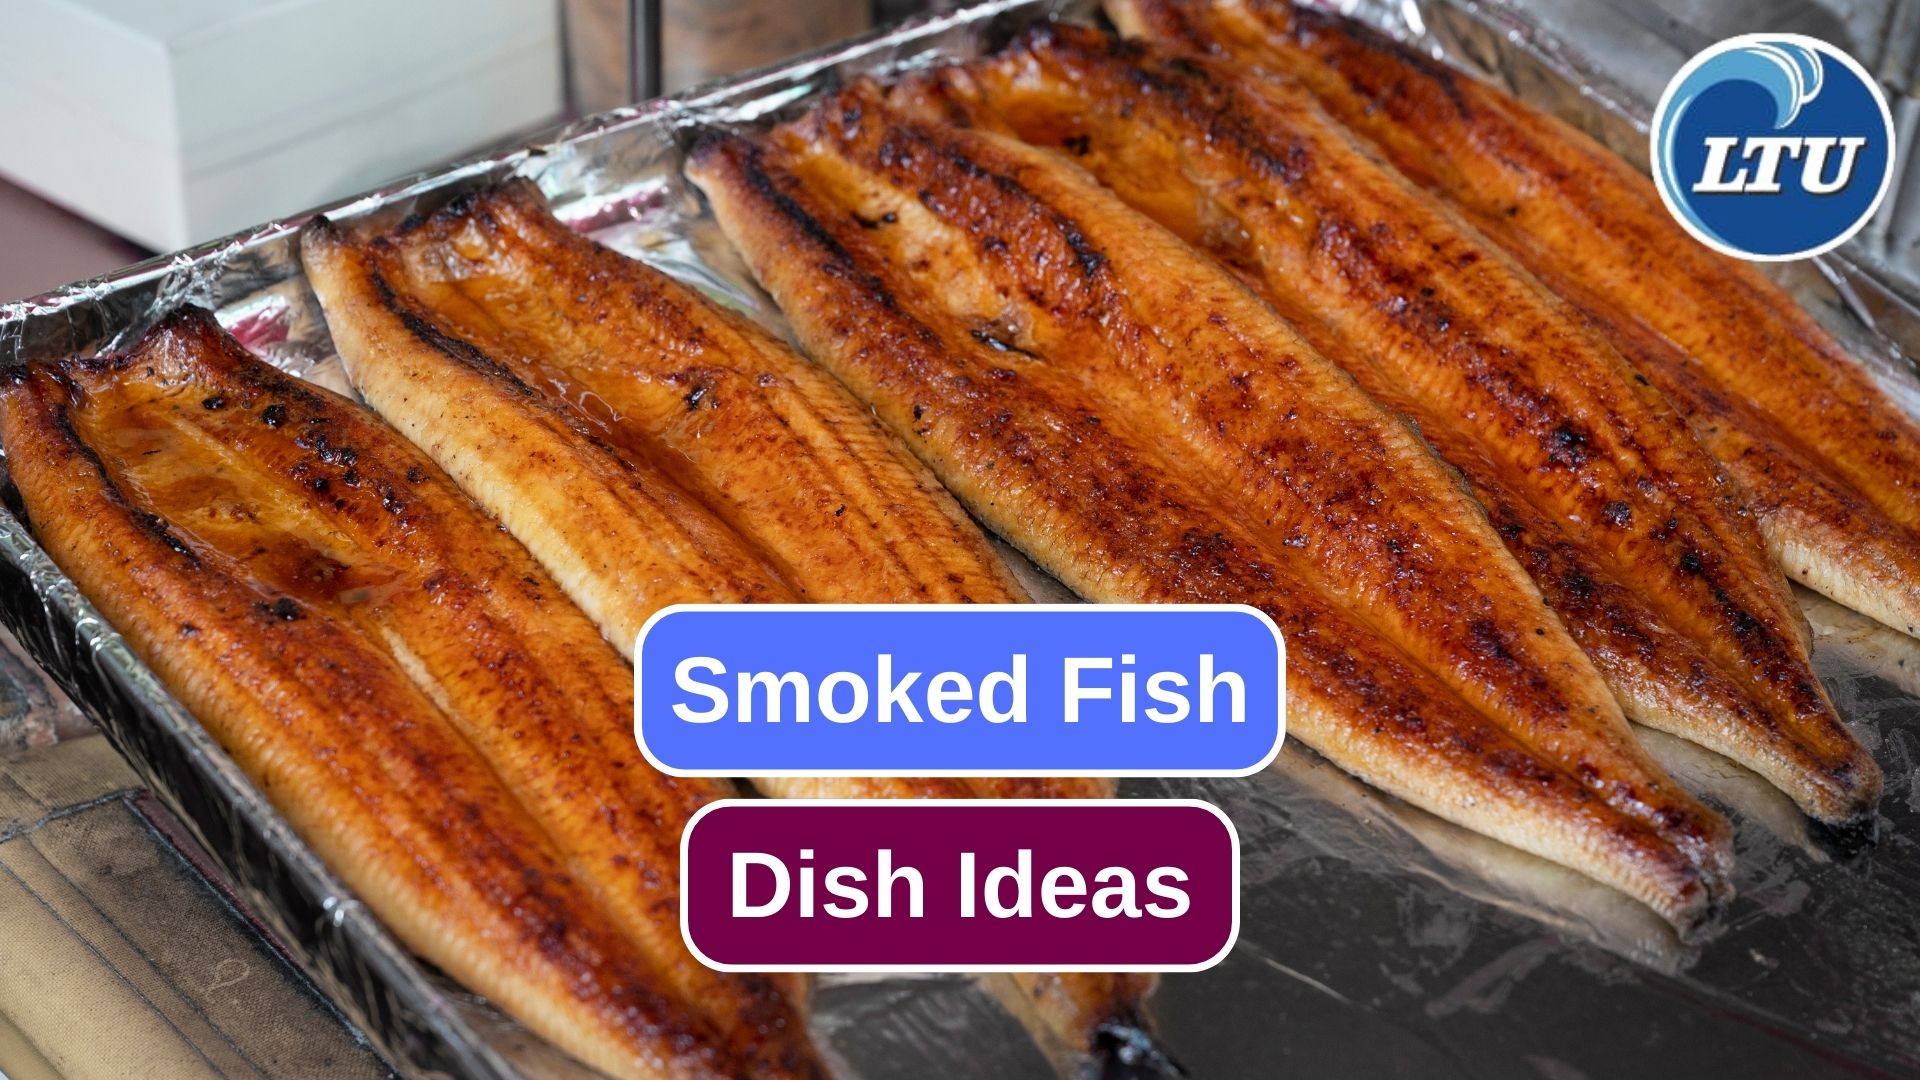 Here are 12 Dish Ideas Using Smoked Fish  